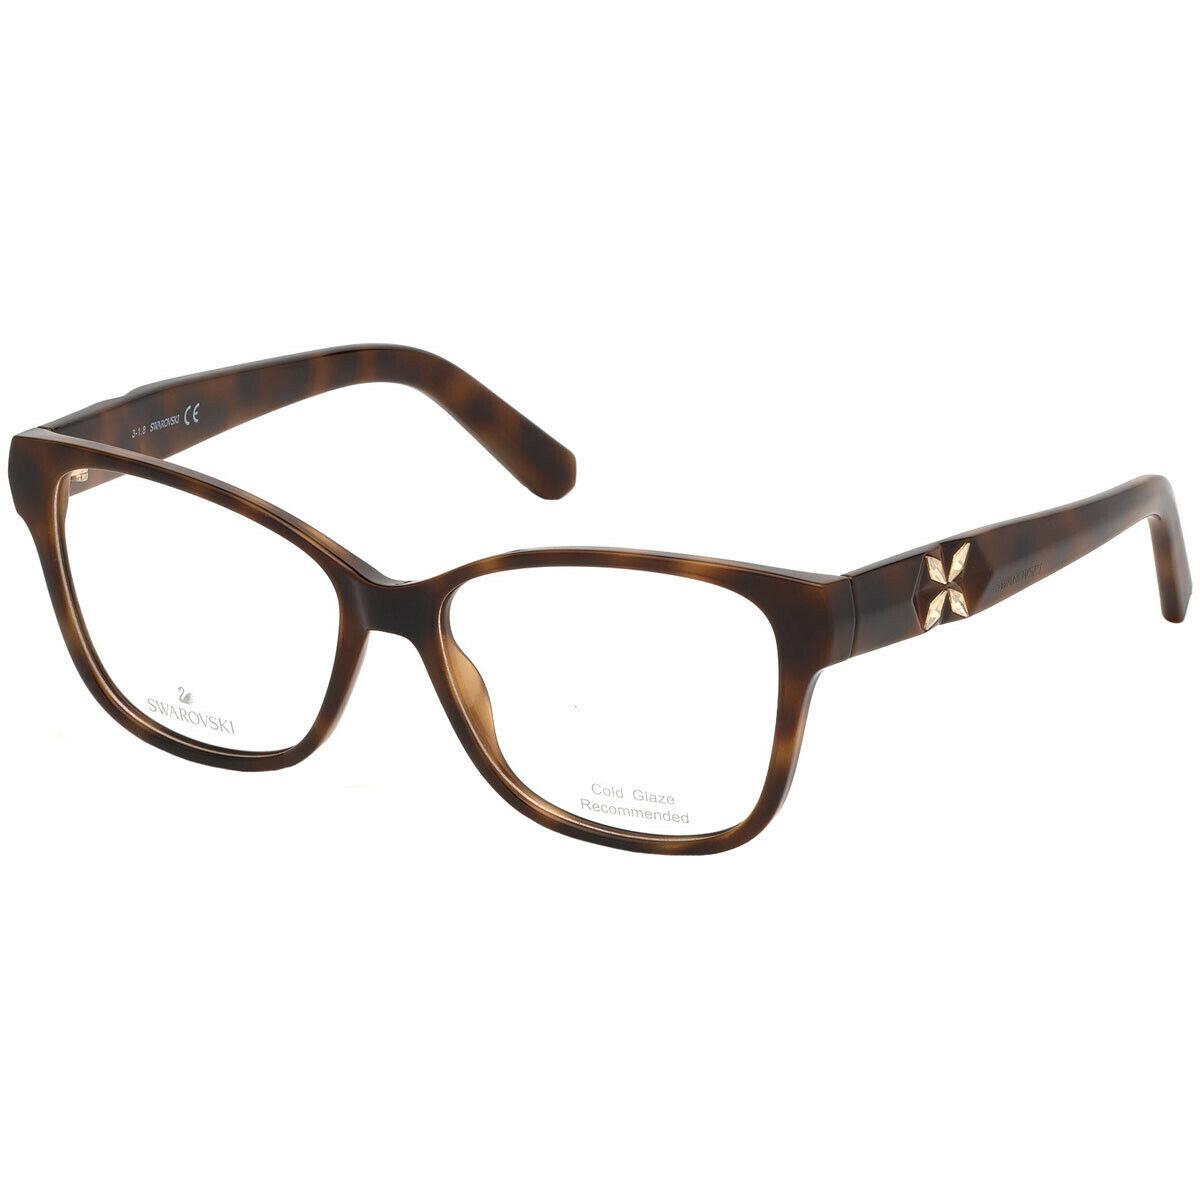 Swarovski SK5282 SW5282 052 Brown Tortoise Eyeglasses Frame 54-15-140 Cold Glaze